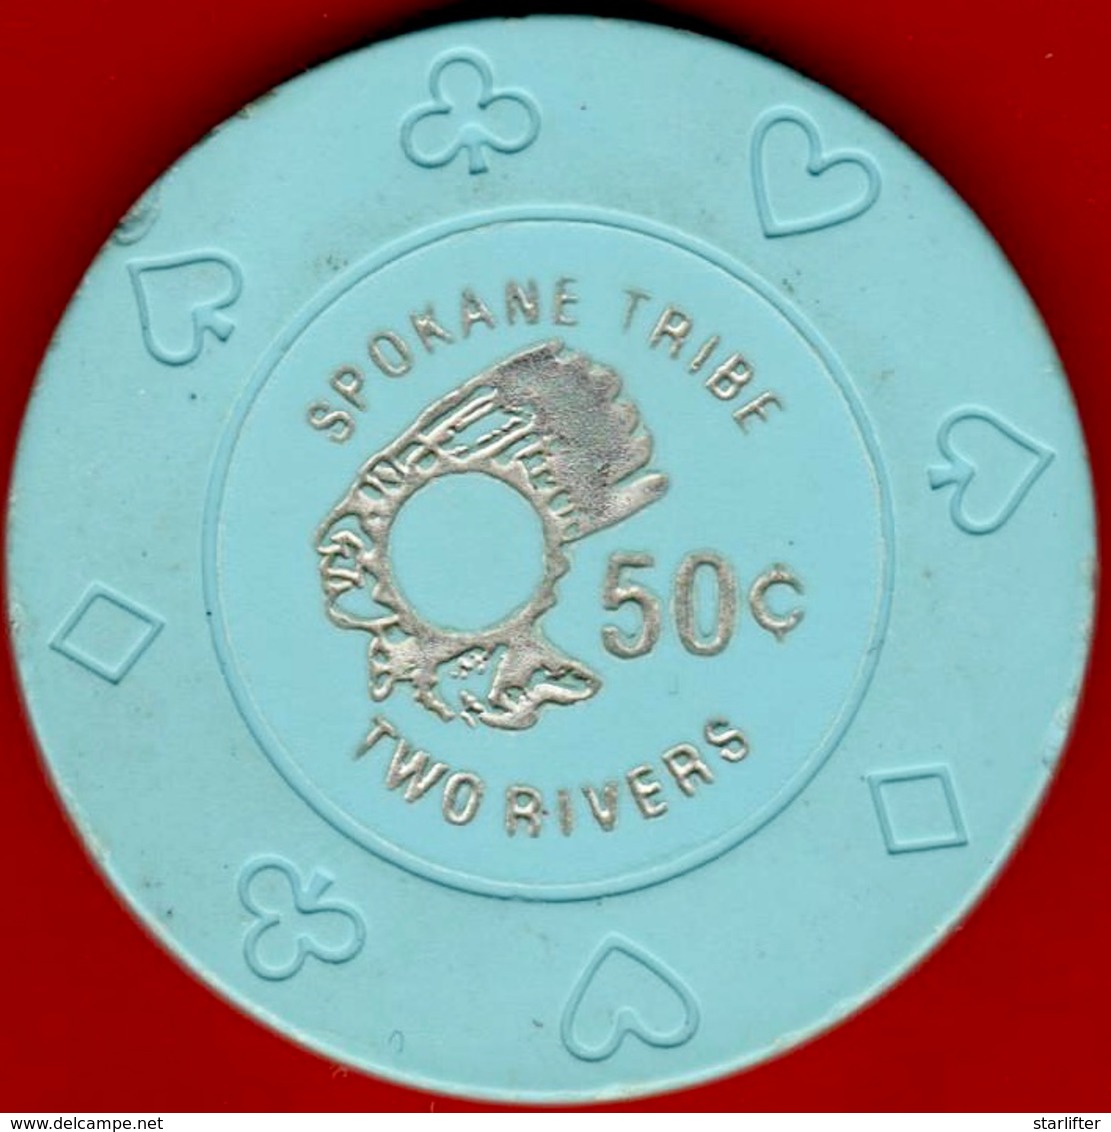 50¢ Casino Chip. Two Rivers, Davenport, WA. I03. - Casino